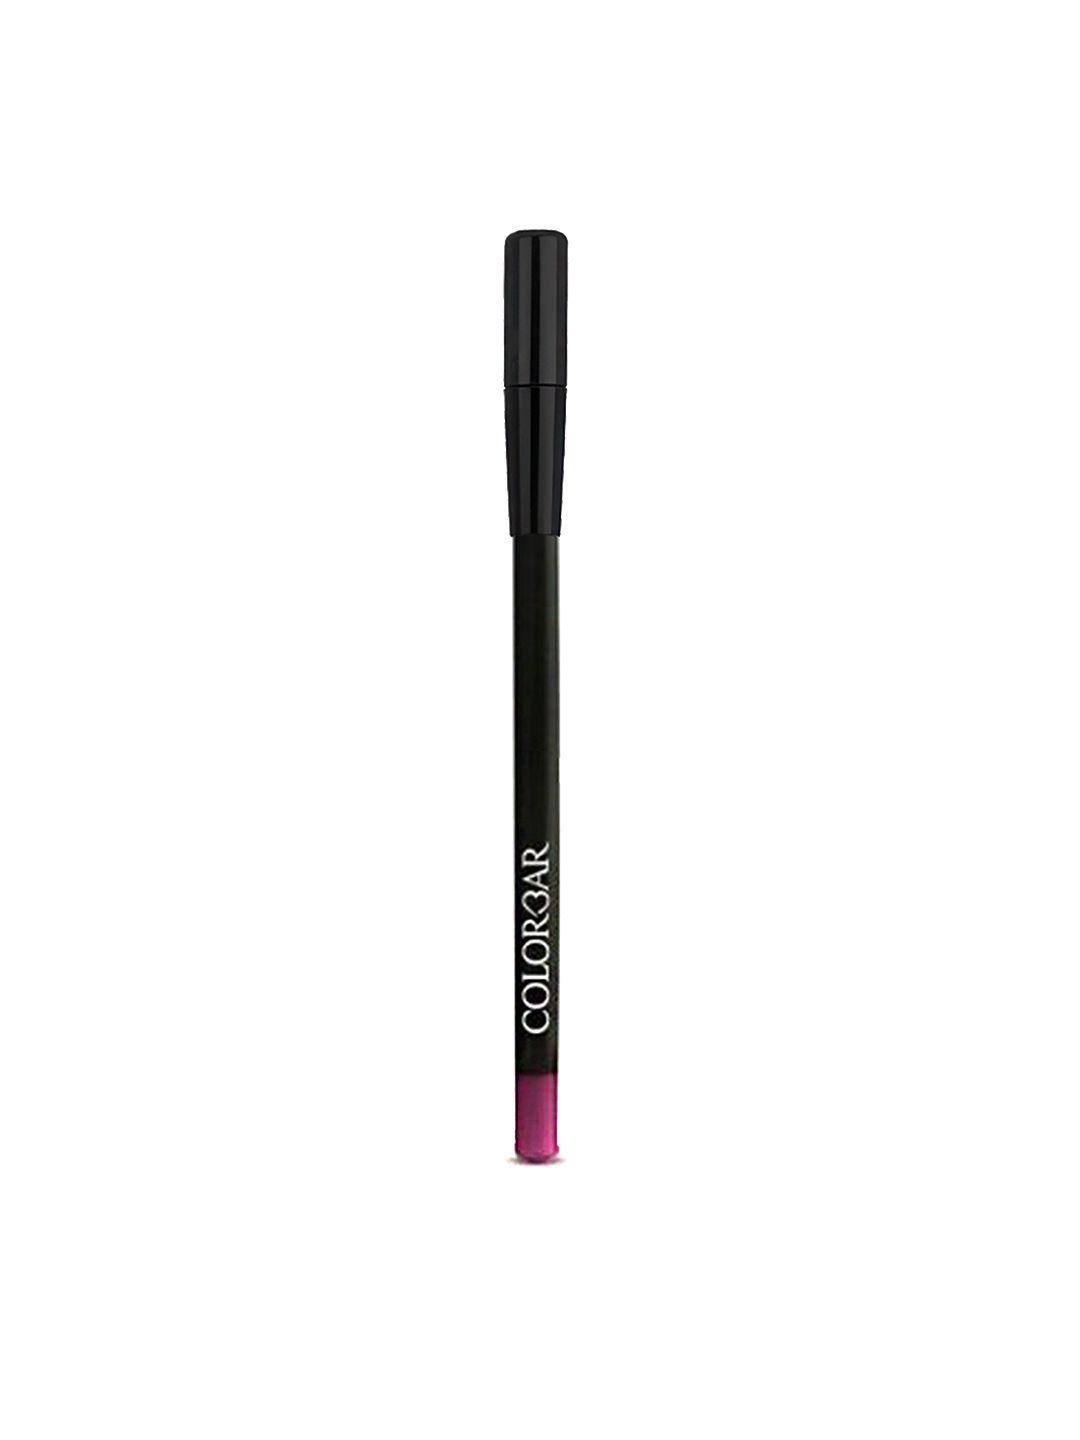 colorbar definer long-wearing lip liner with vitamins e & c - summer pink 003